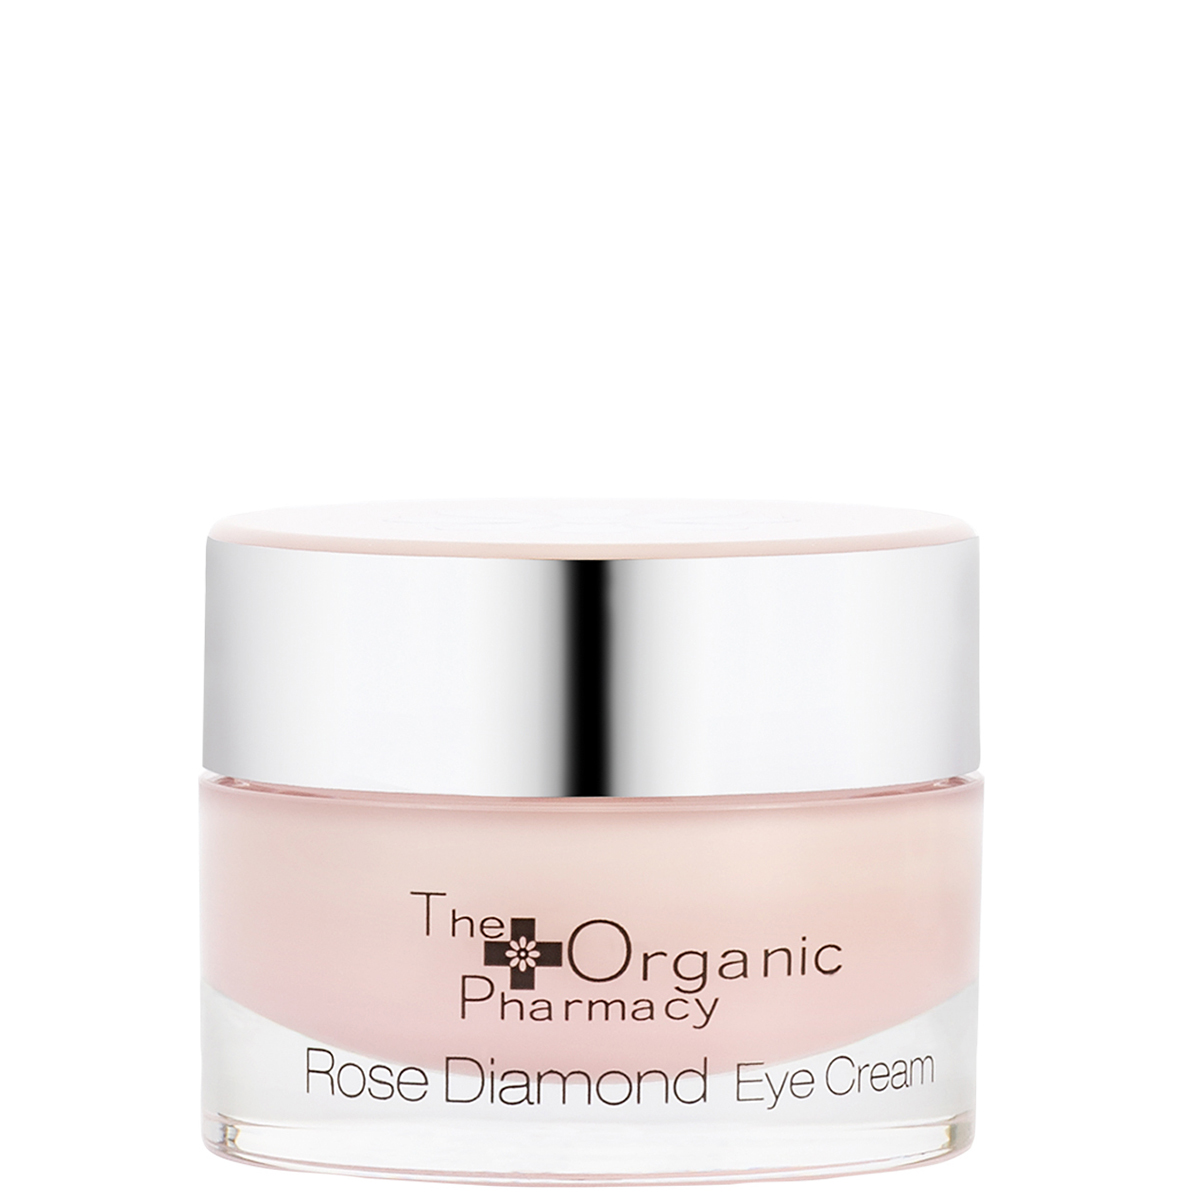 The Organic Pharmacy Rose Diamond Eye Cream